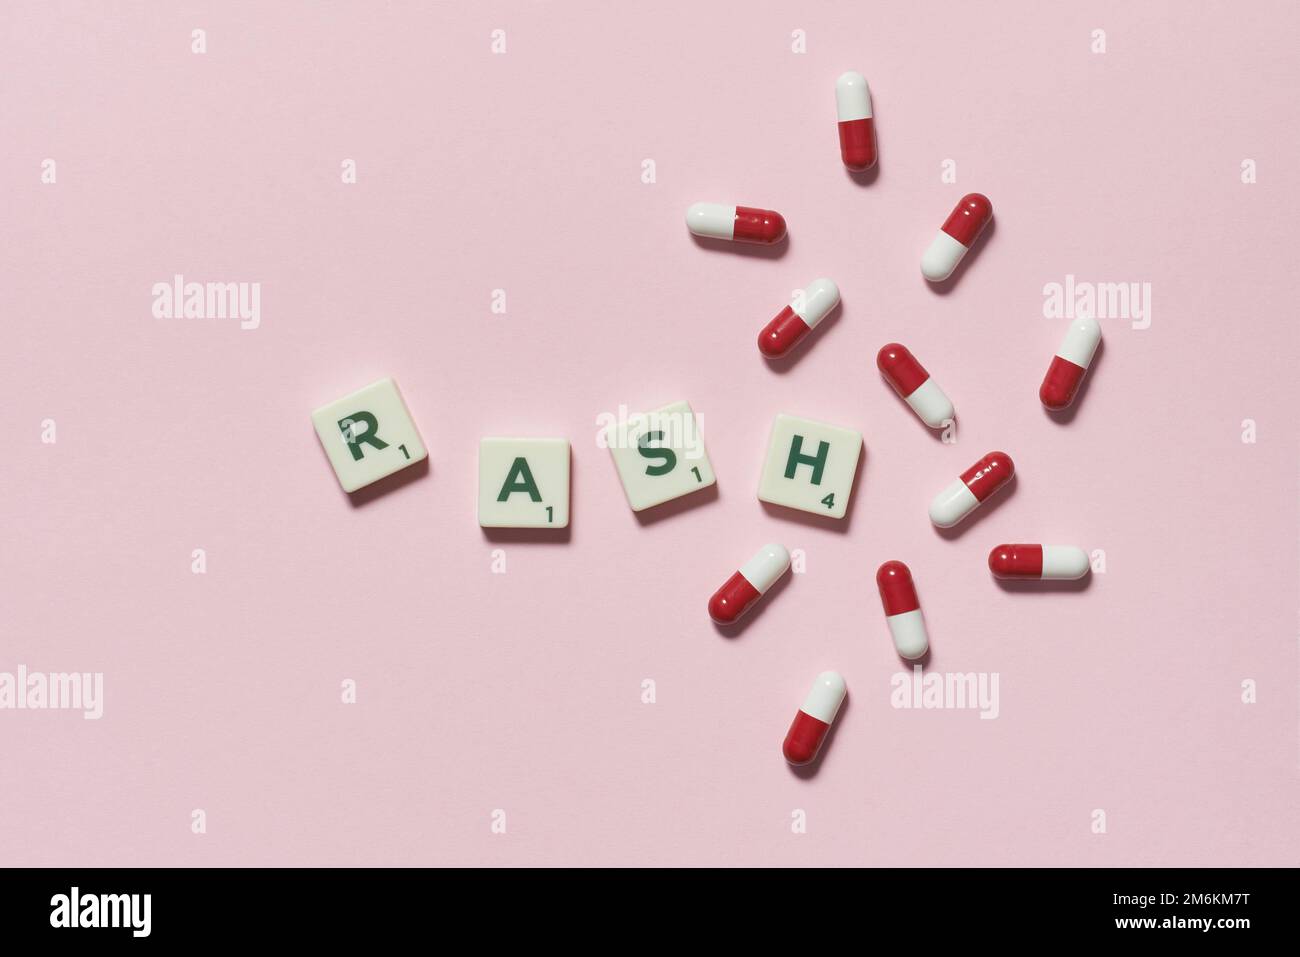 Rash formed of scrabble blocks and pharmaceutical pills. Stock Photo